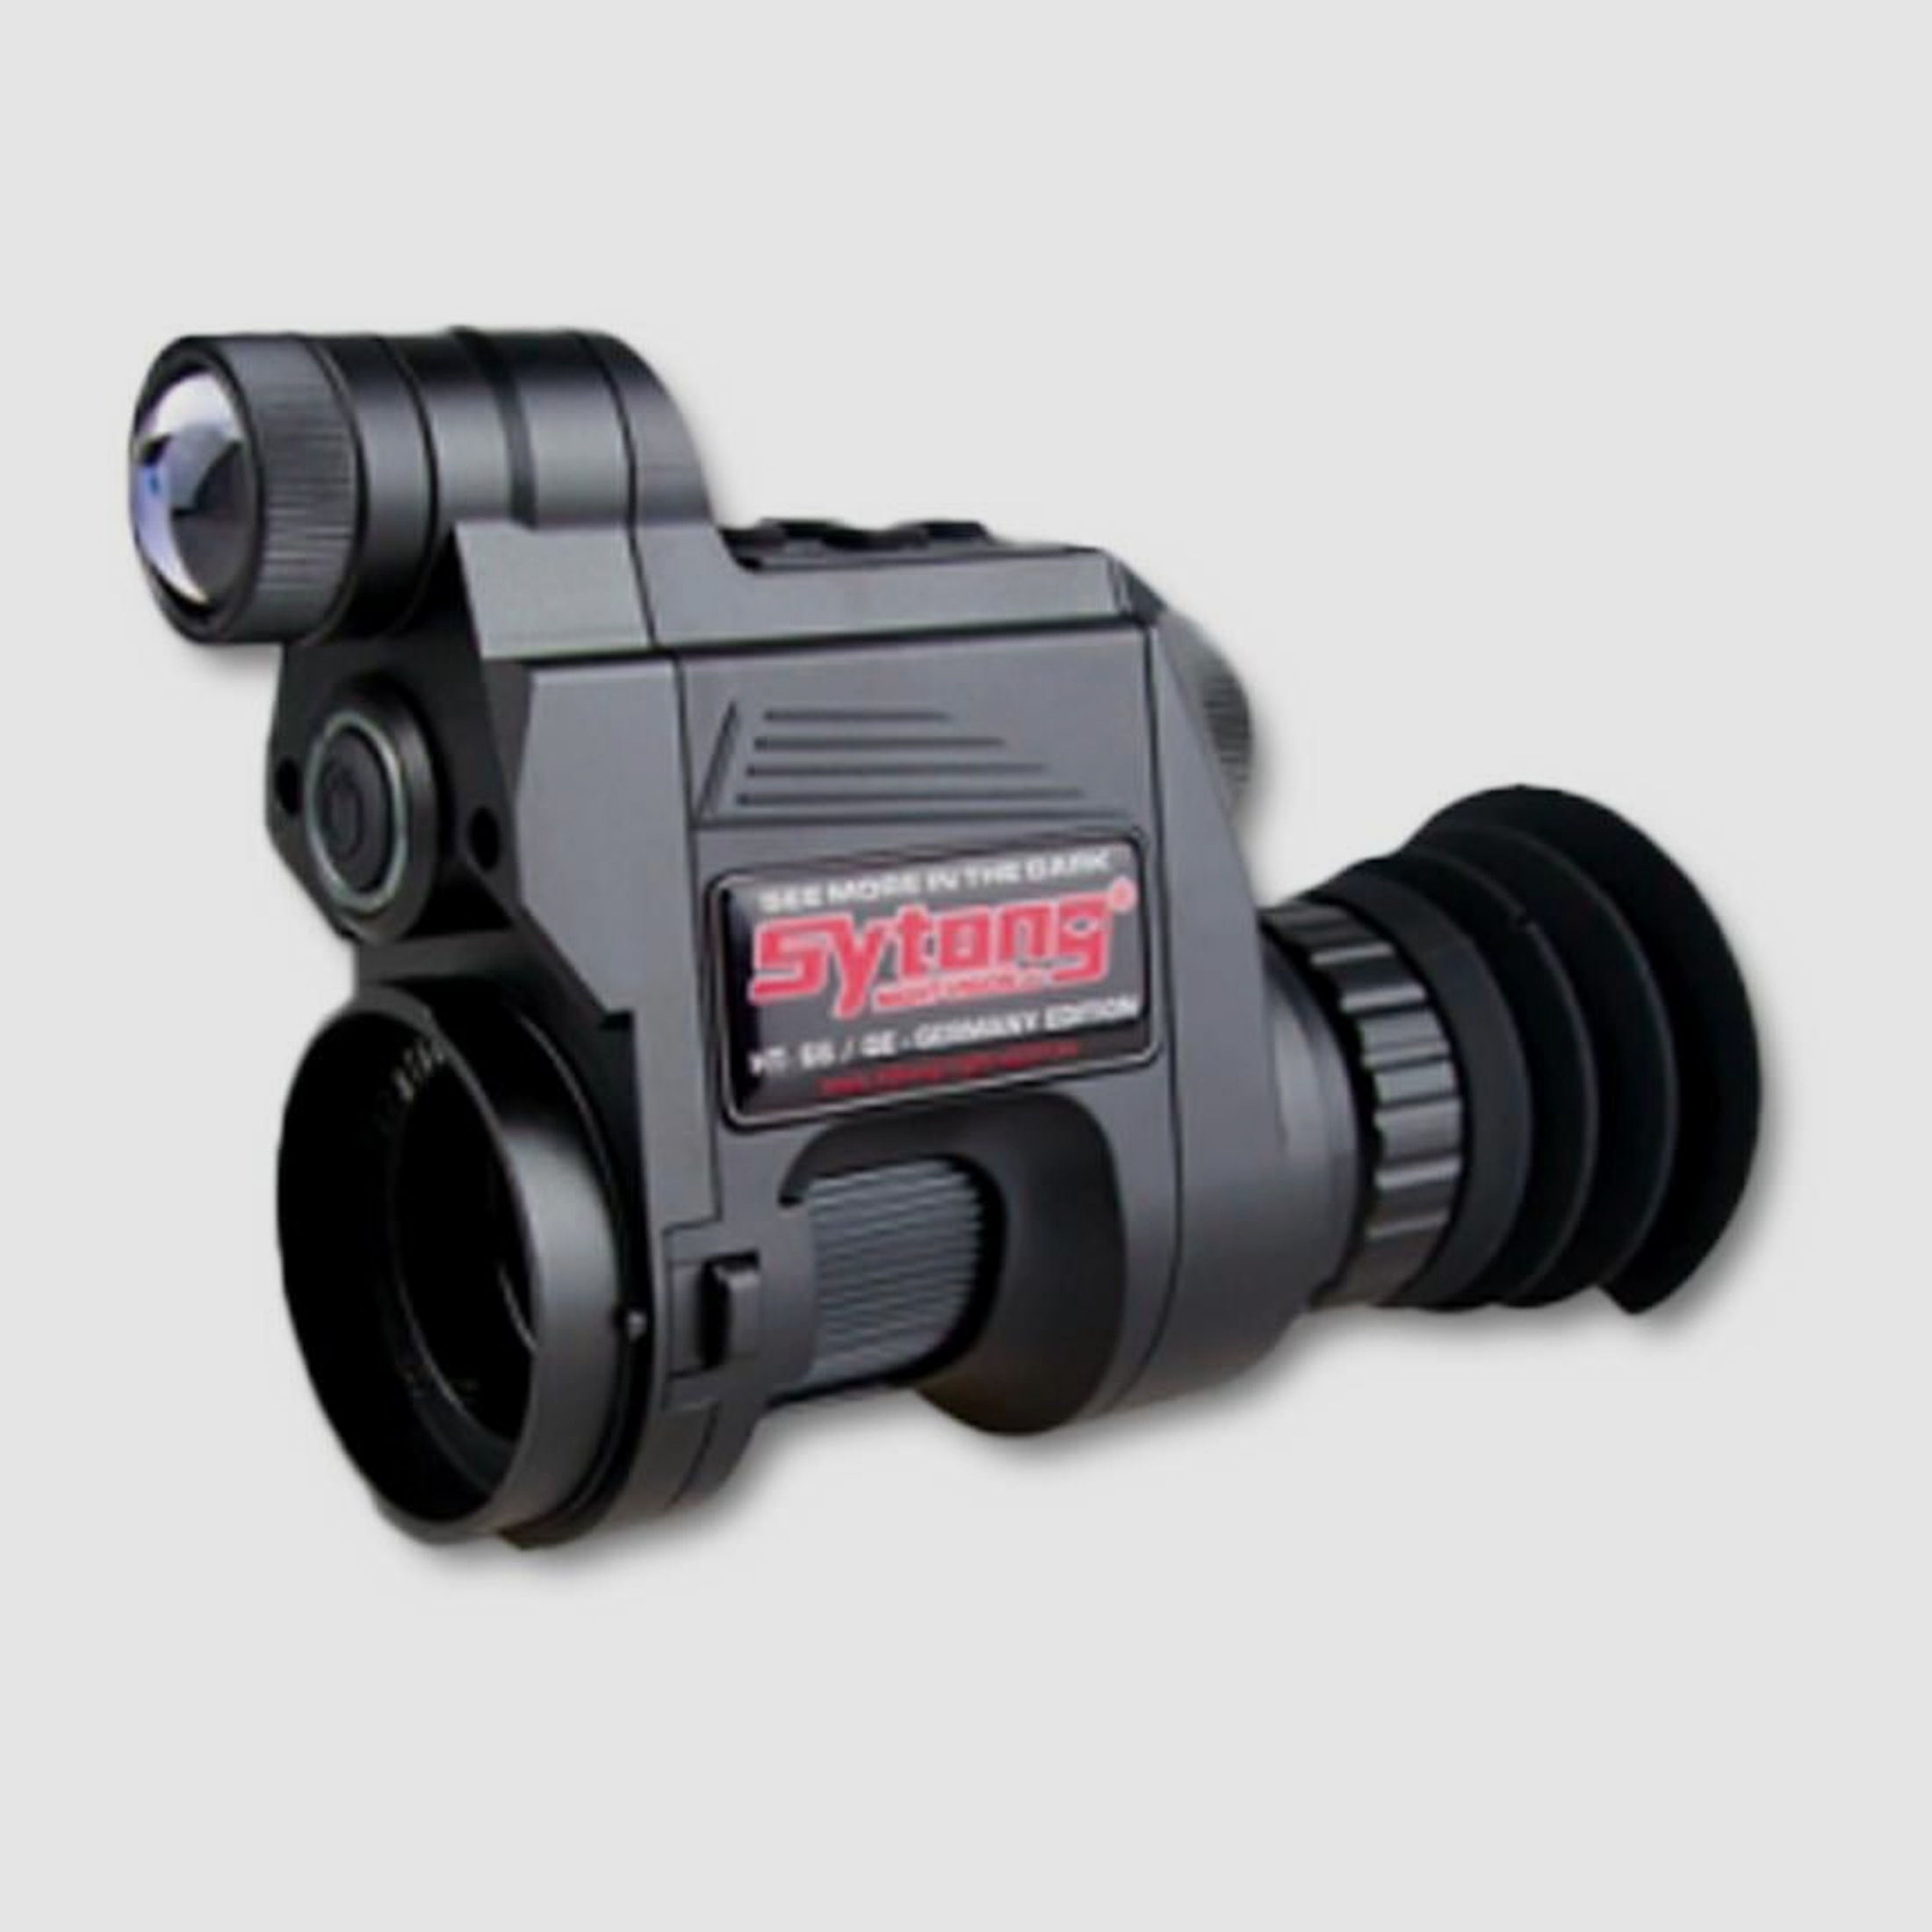 Sytong Night Vision Nachtsichtgerät HT-66 -NV850 mit 16 mm Objektiv Deutschland Edition / OLED-Werkset Schwarz